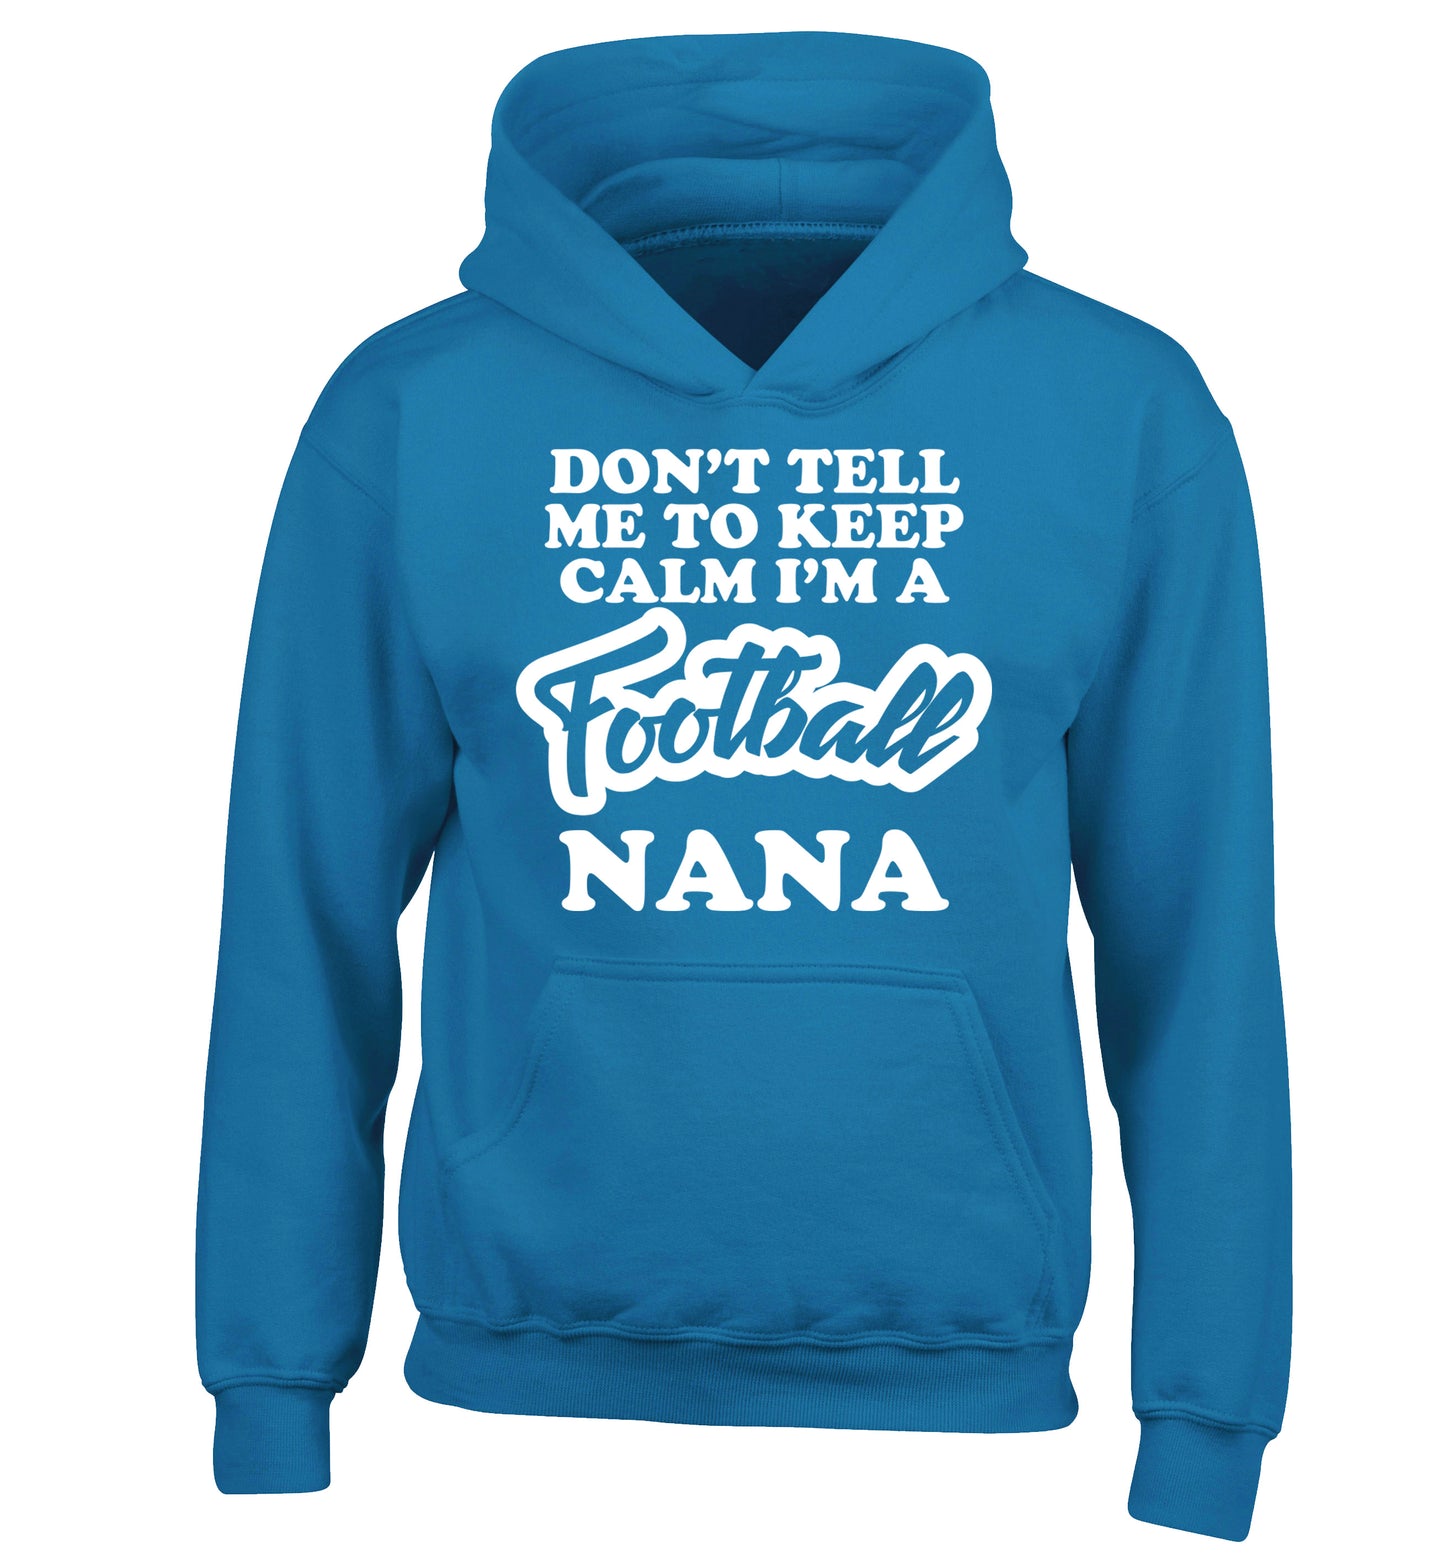 Don't tell me to keep calm I'm a football nana children's blue hoodie 12-14 Years